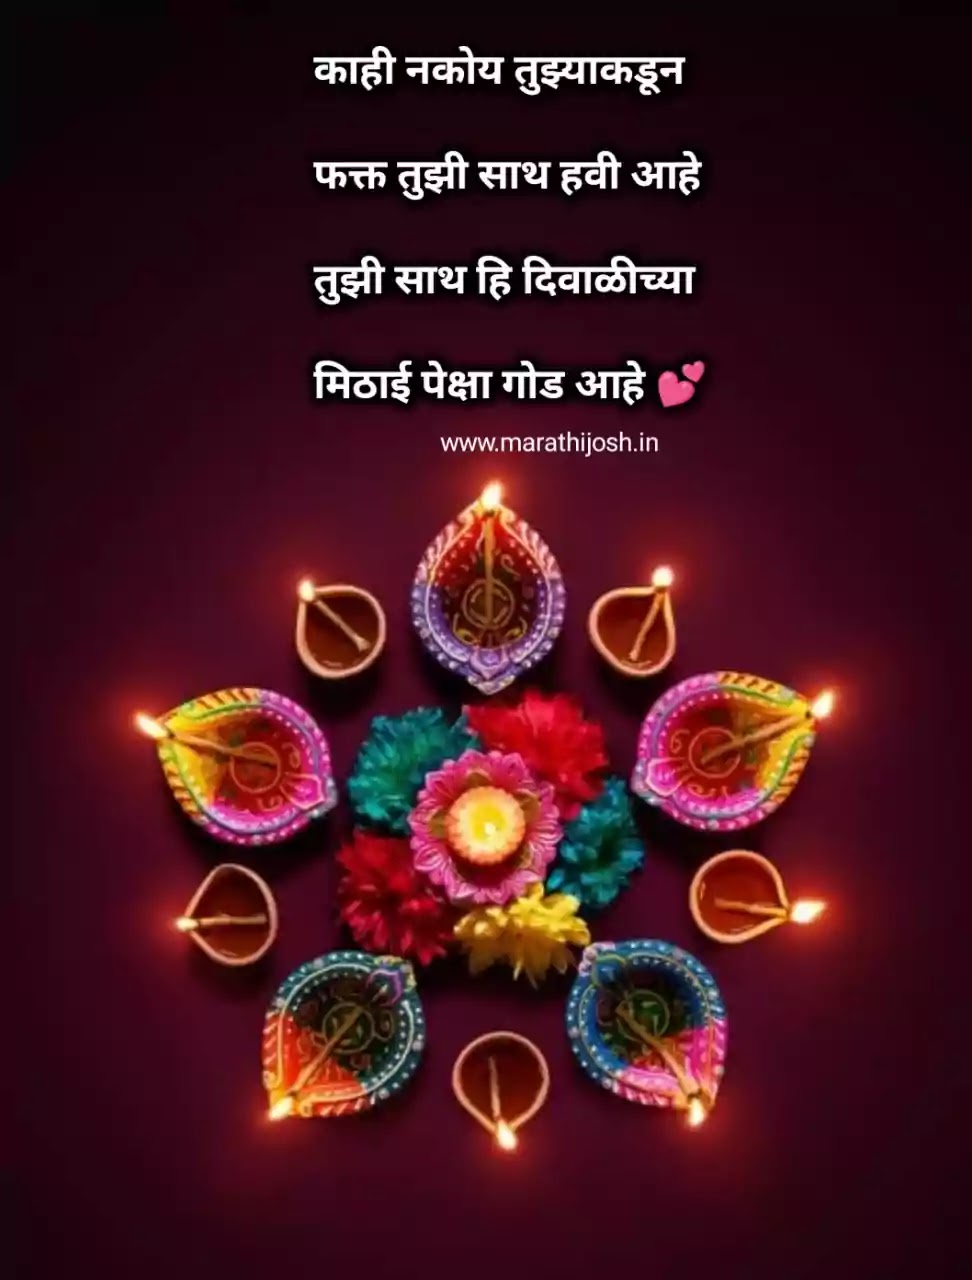 Happy Diwali Images In Marathi